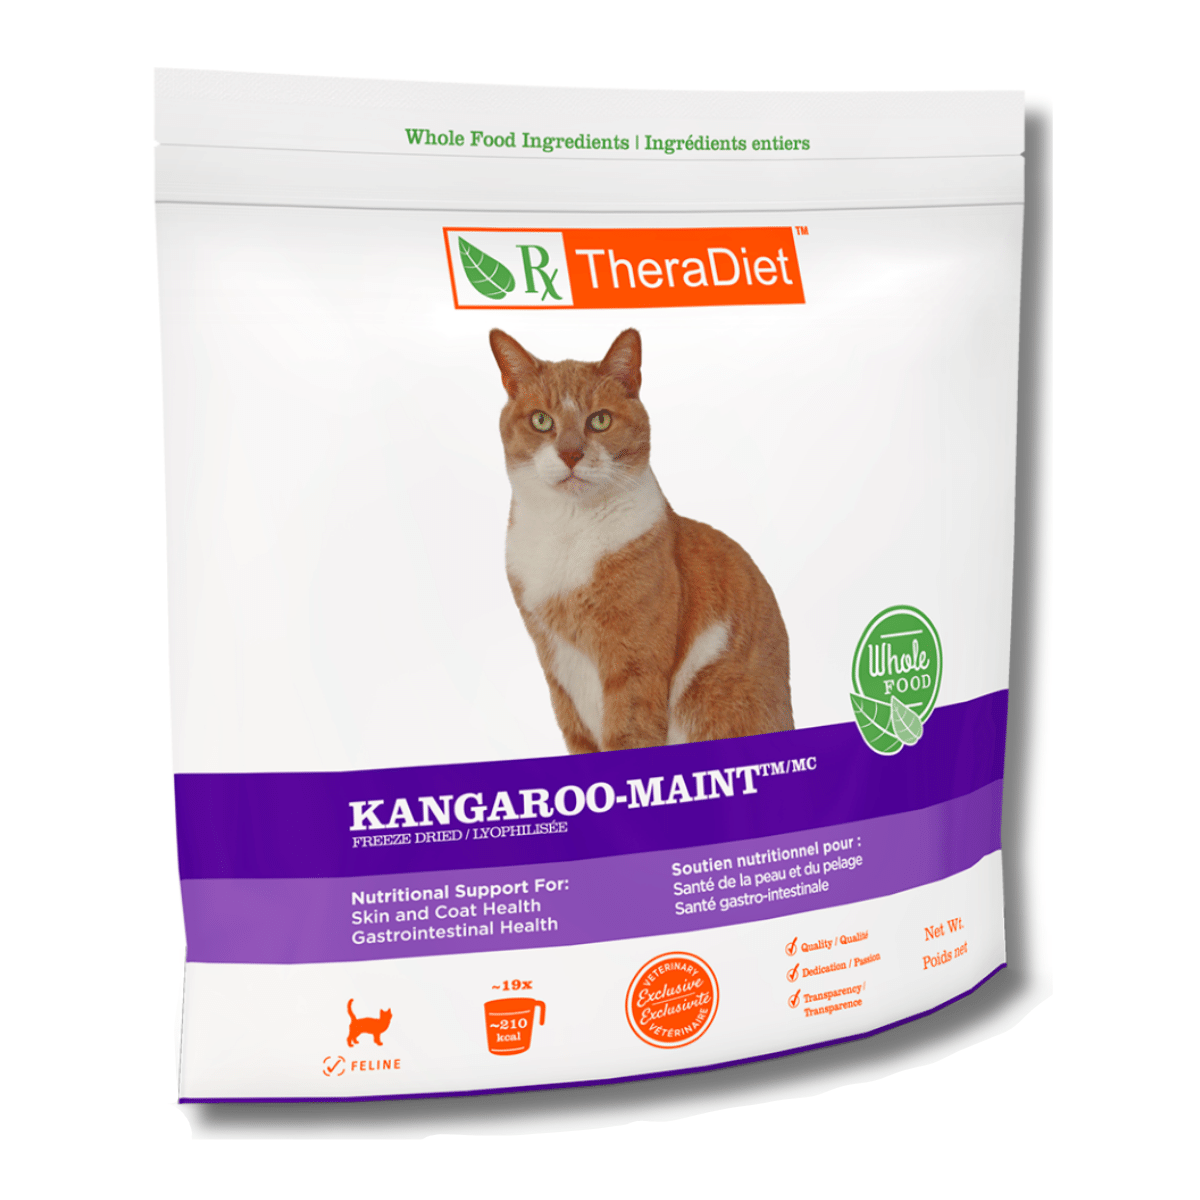 Kangaroo-MAINT Freeze-Dried Cat Food